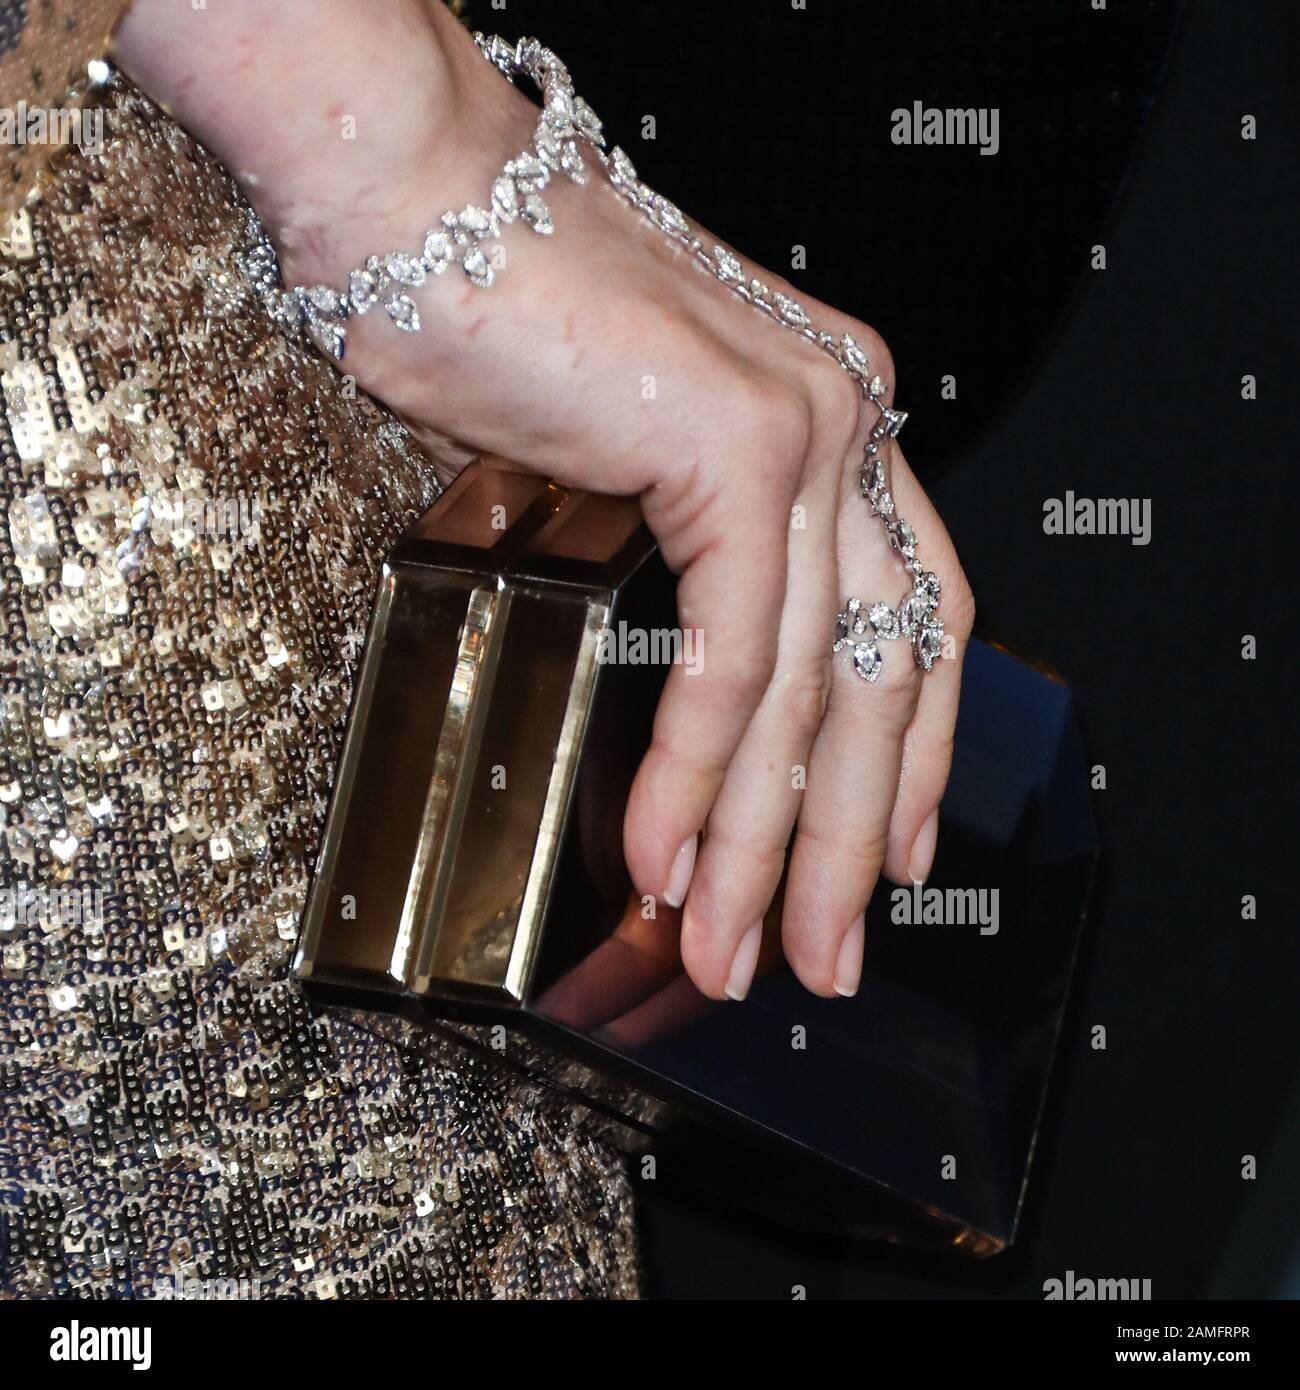 26 Celebrities Wearing Cartier Love Bracelet You Should Know - A Fashion  Blog